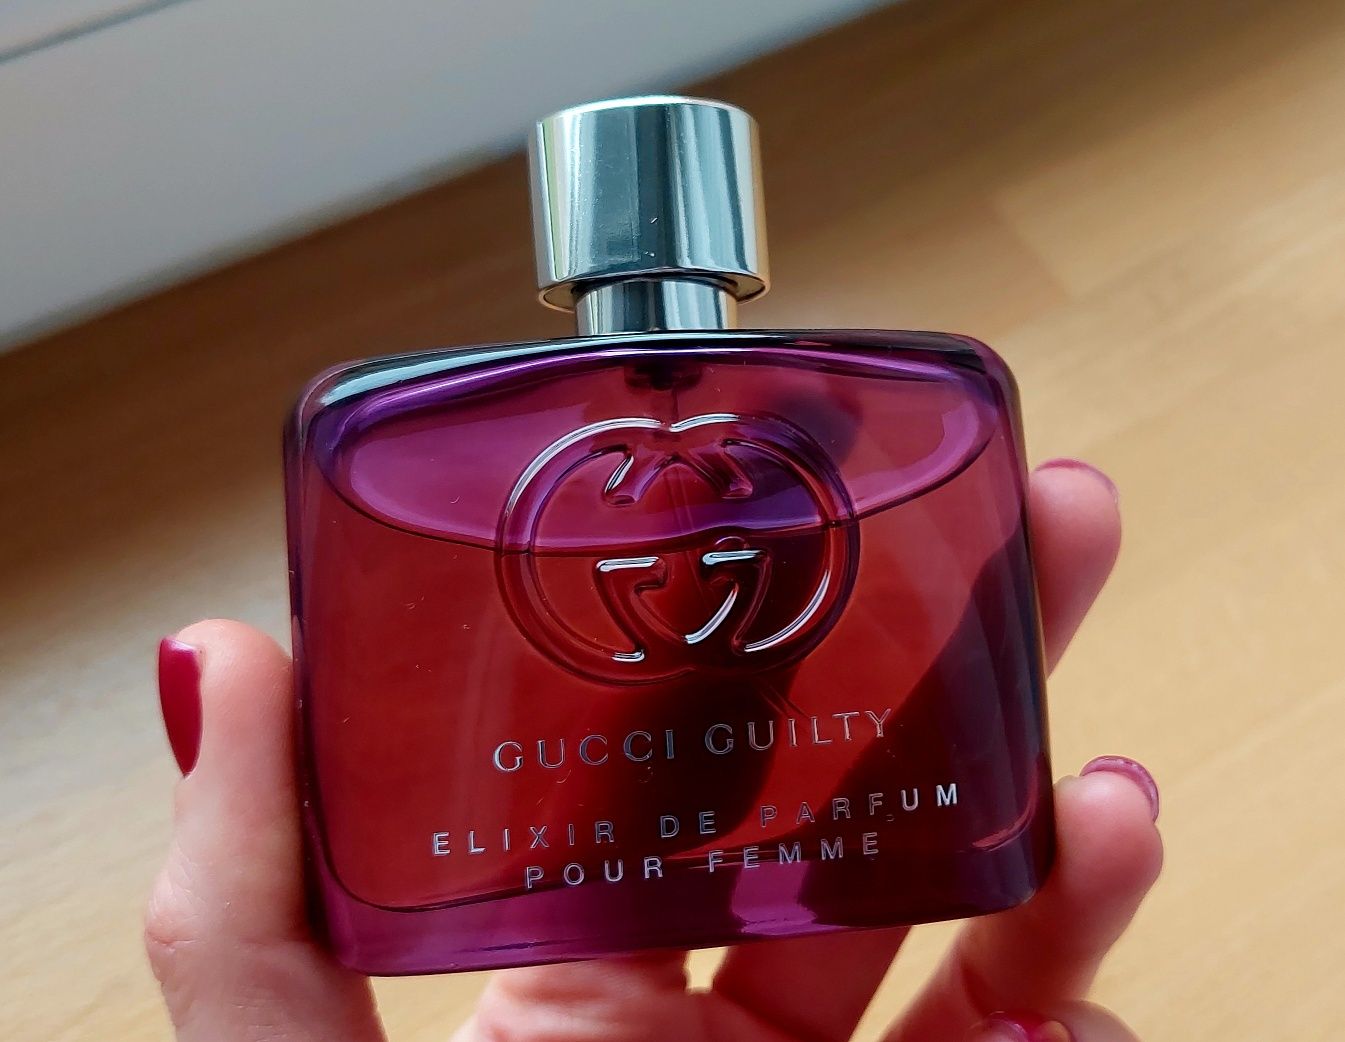 Gucci guilty Elixir di parfum